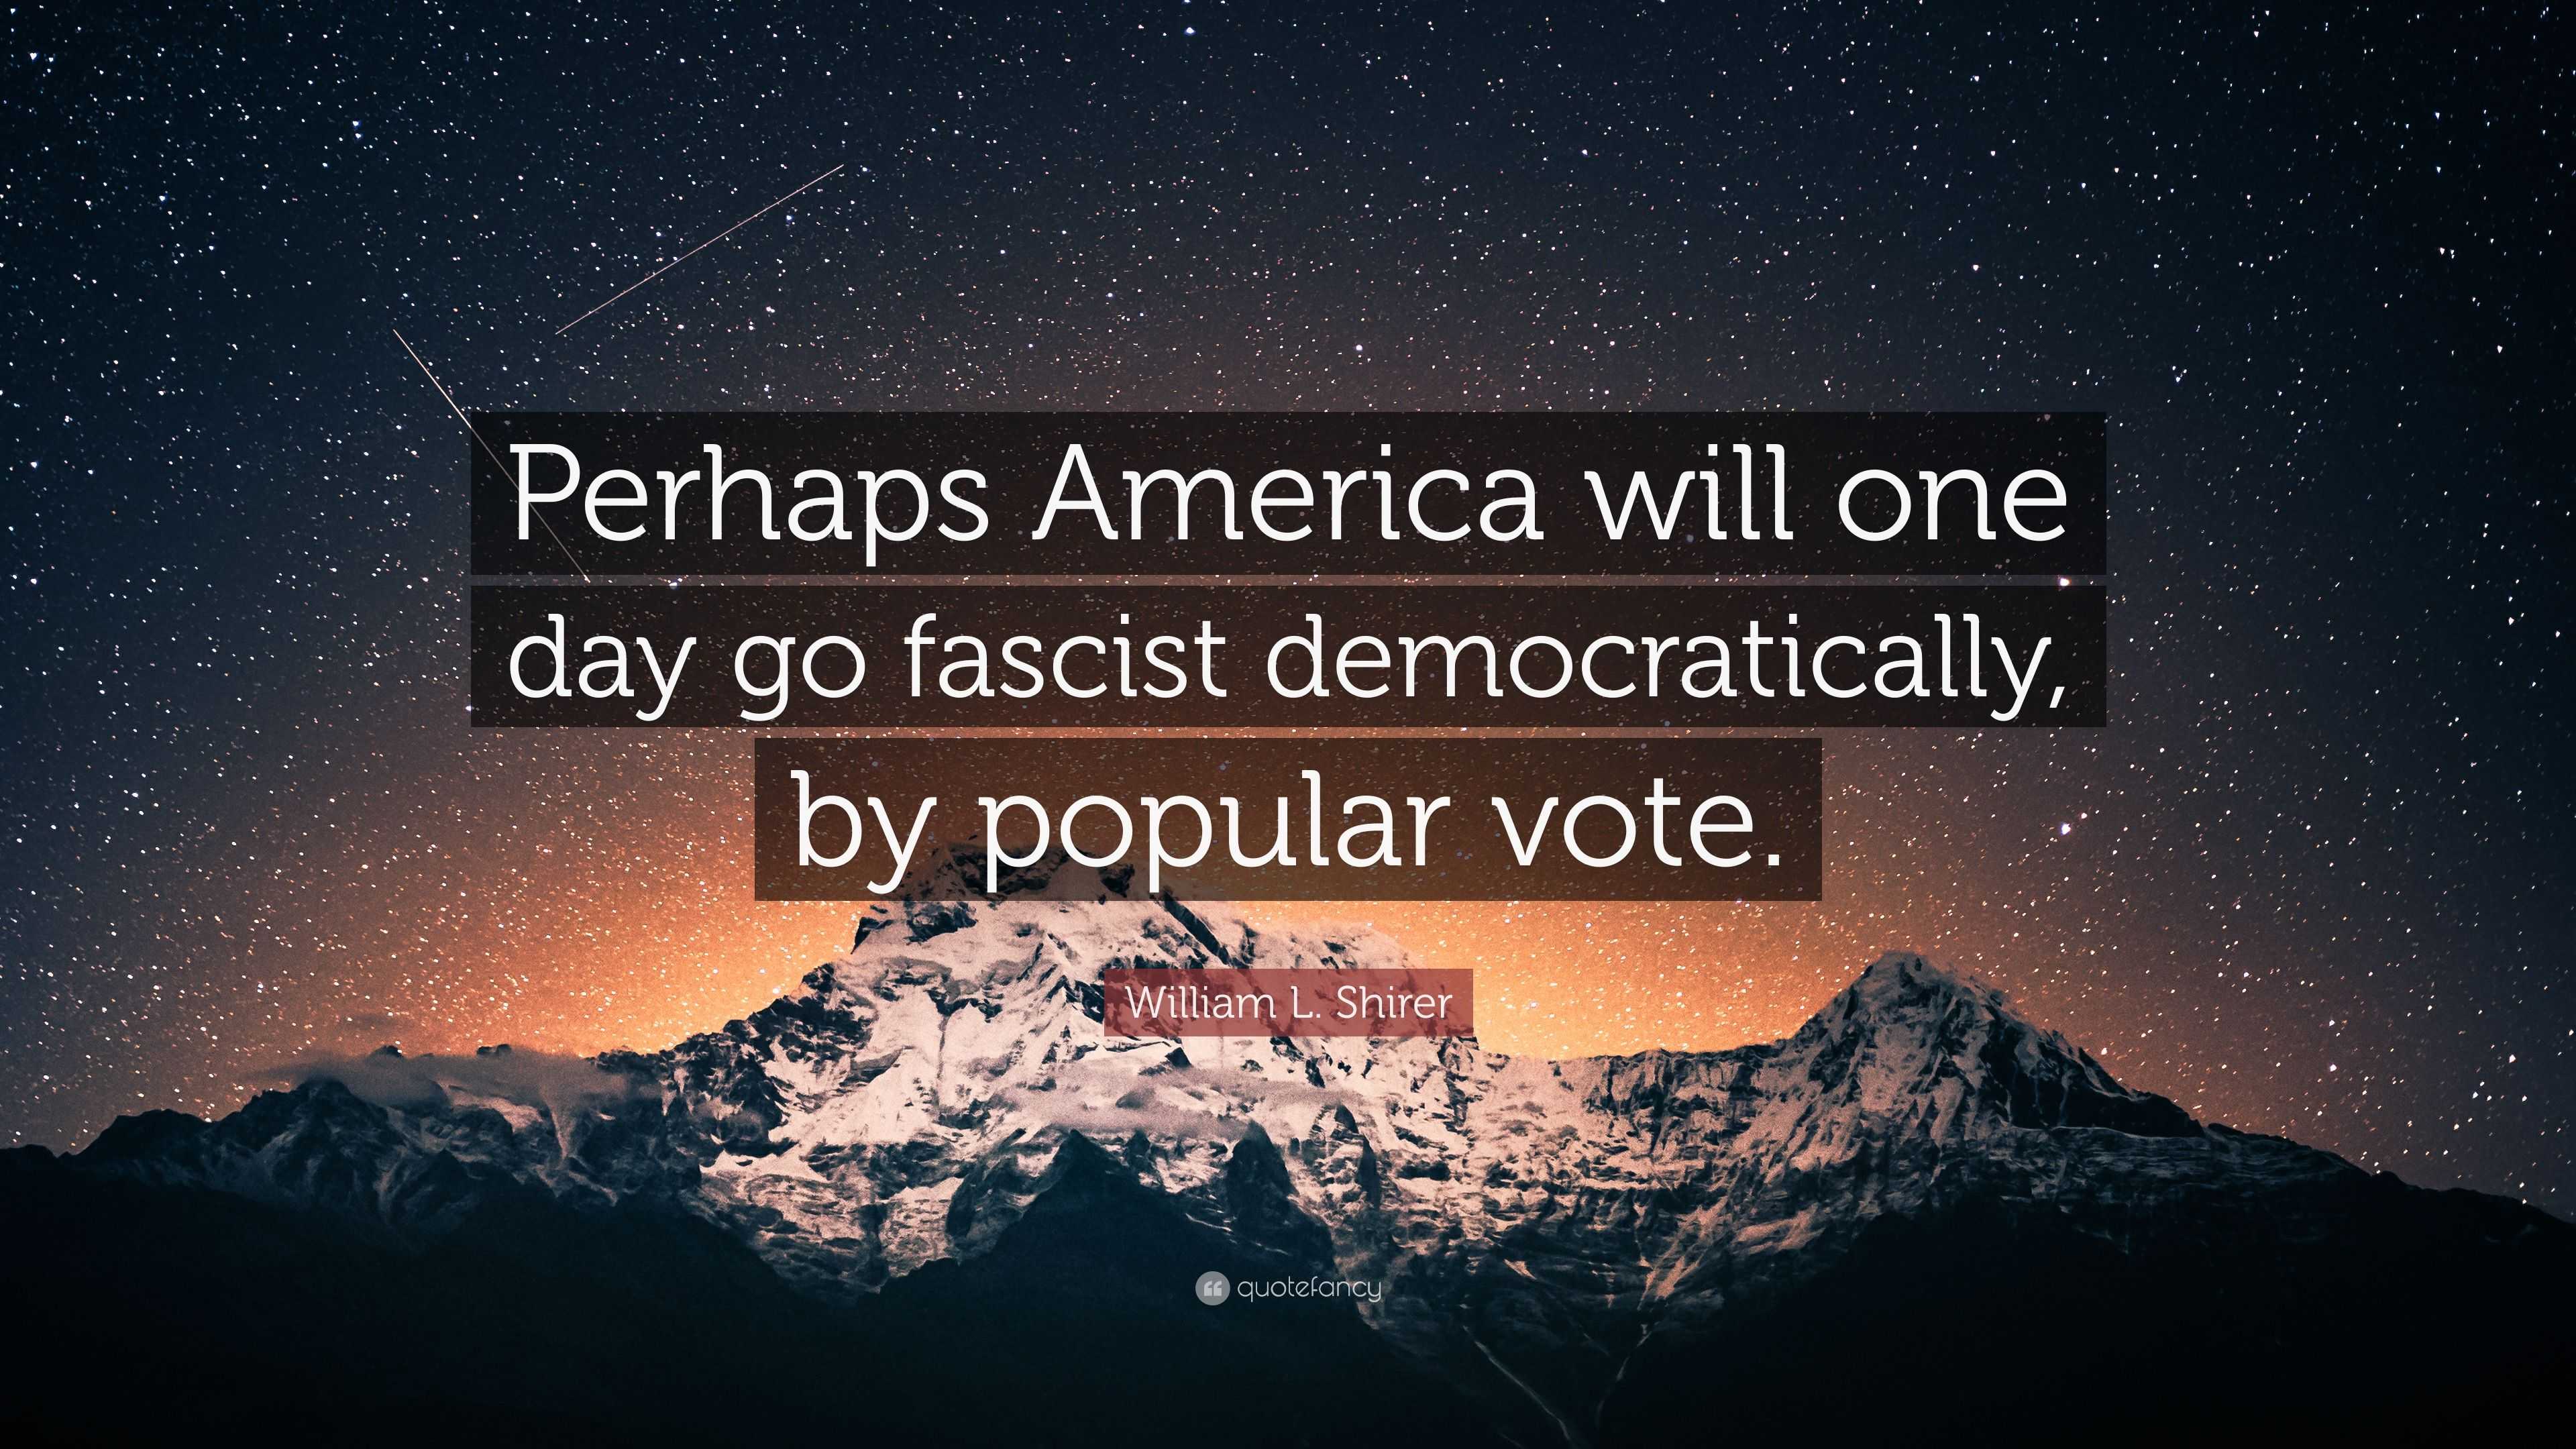 William L. Shirer Quote: “Perhaps America will one day go fascist